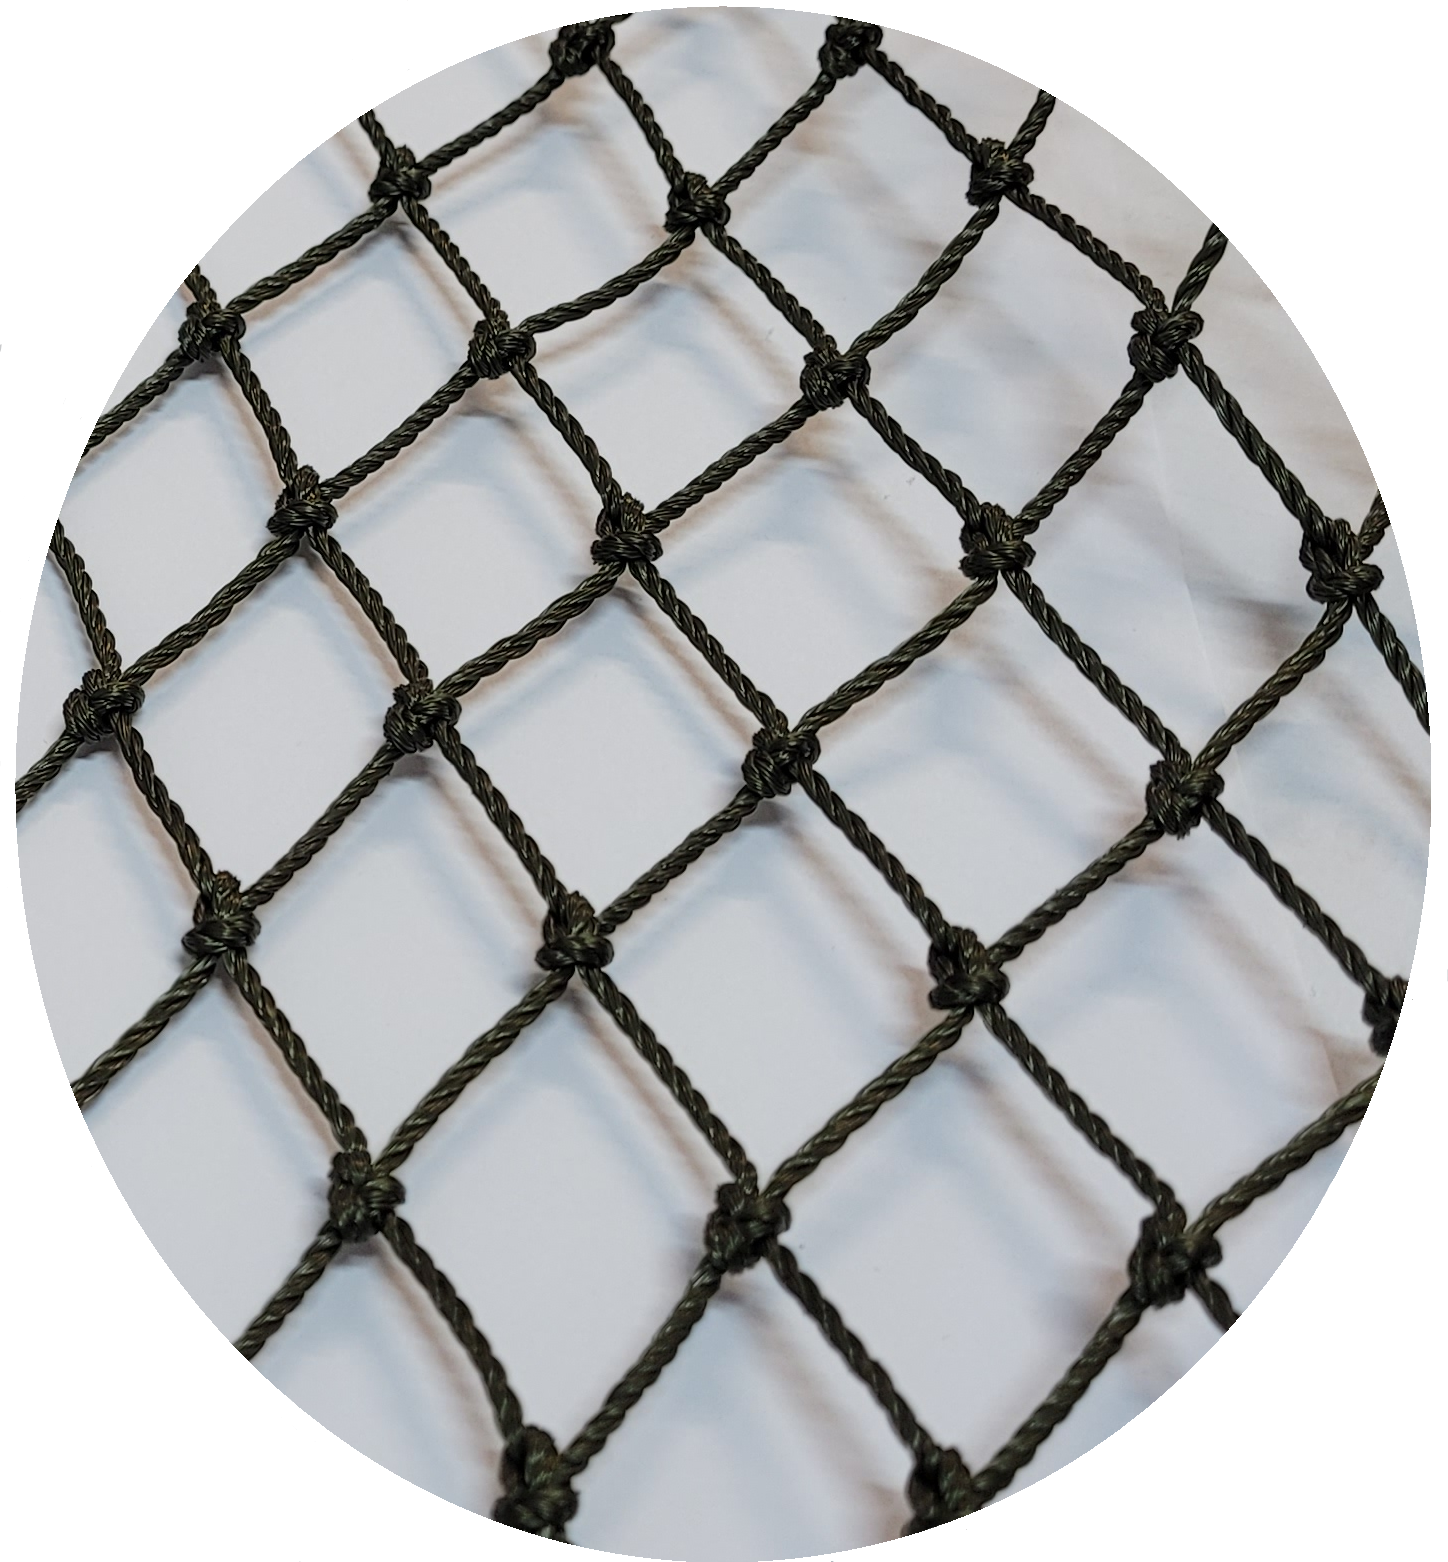 BTR twisted plastic nets